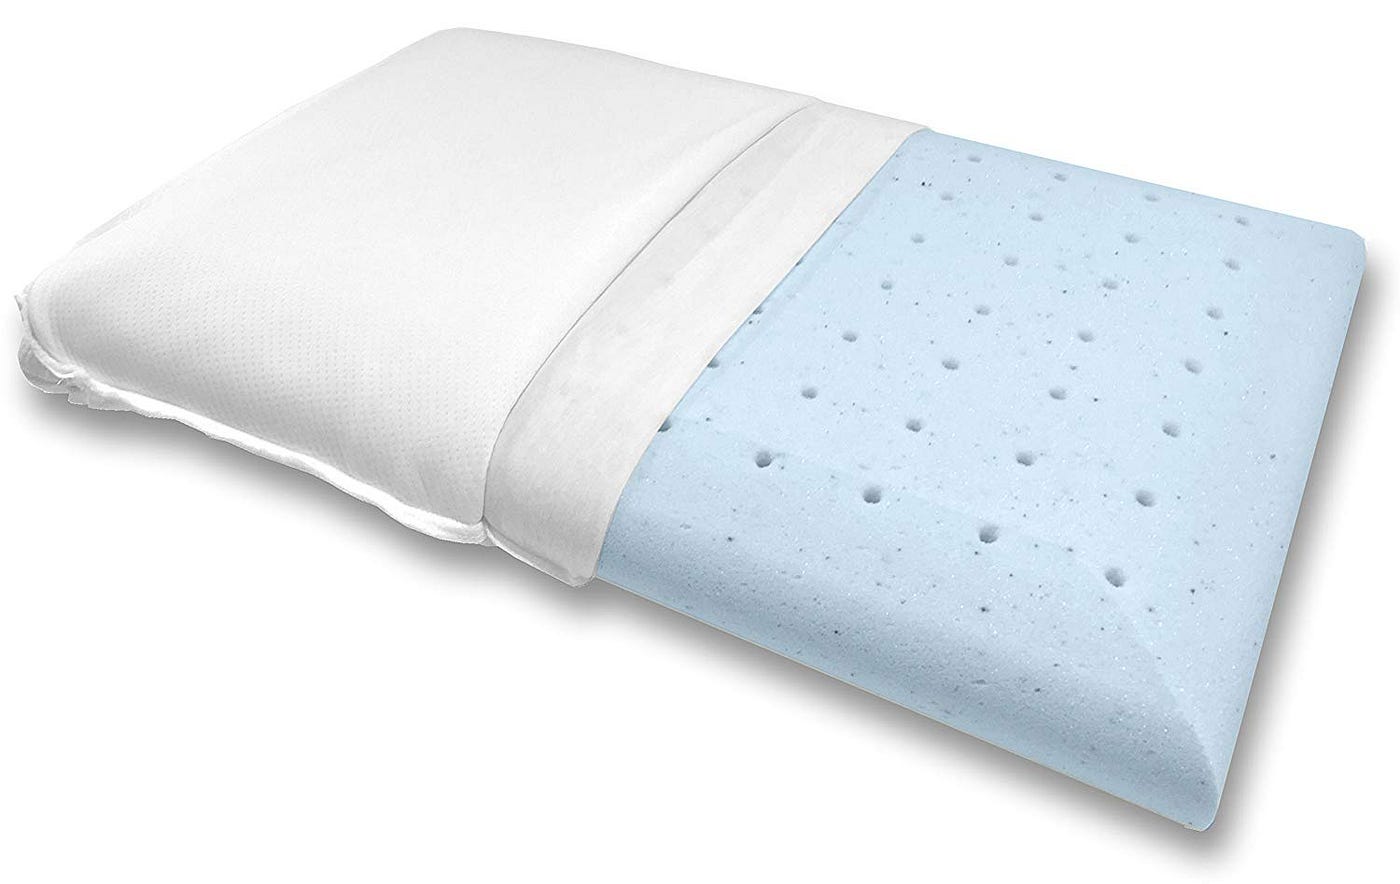 Best thin Pillows for slim sleepers | by Hannah Nicole | Medium